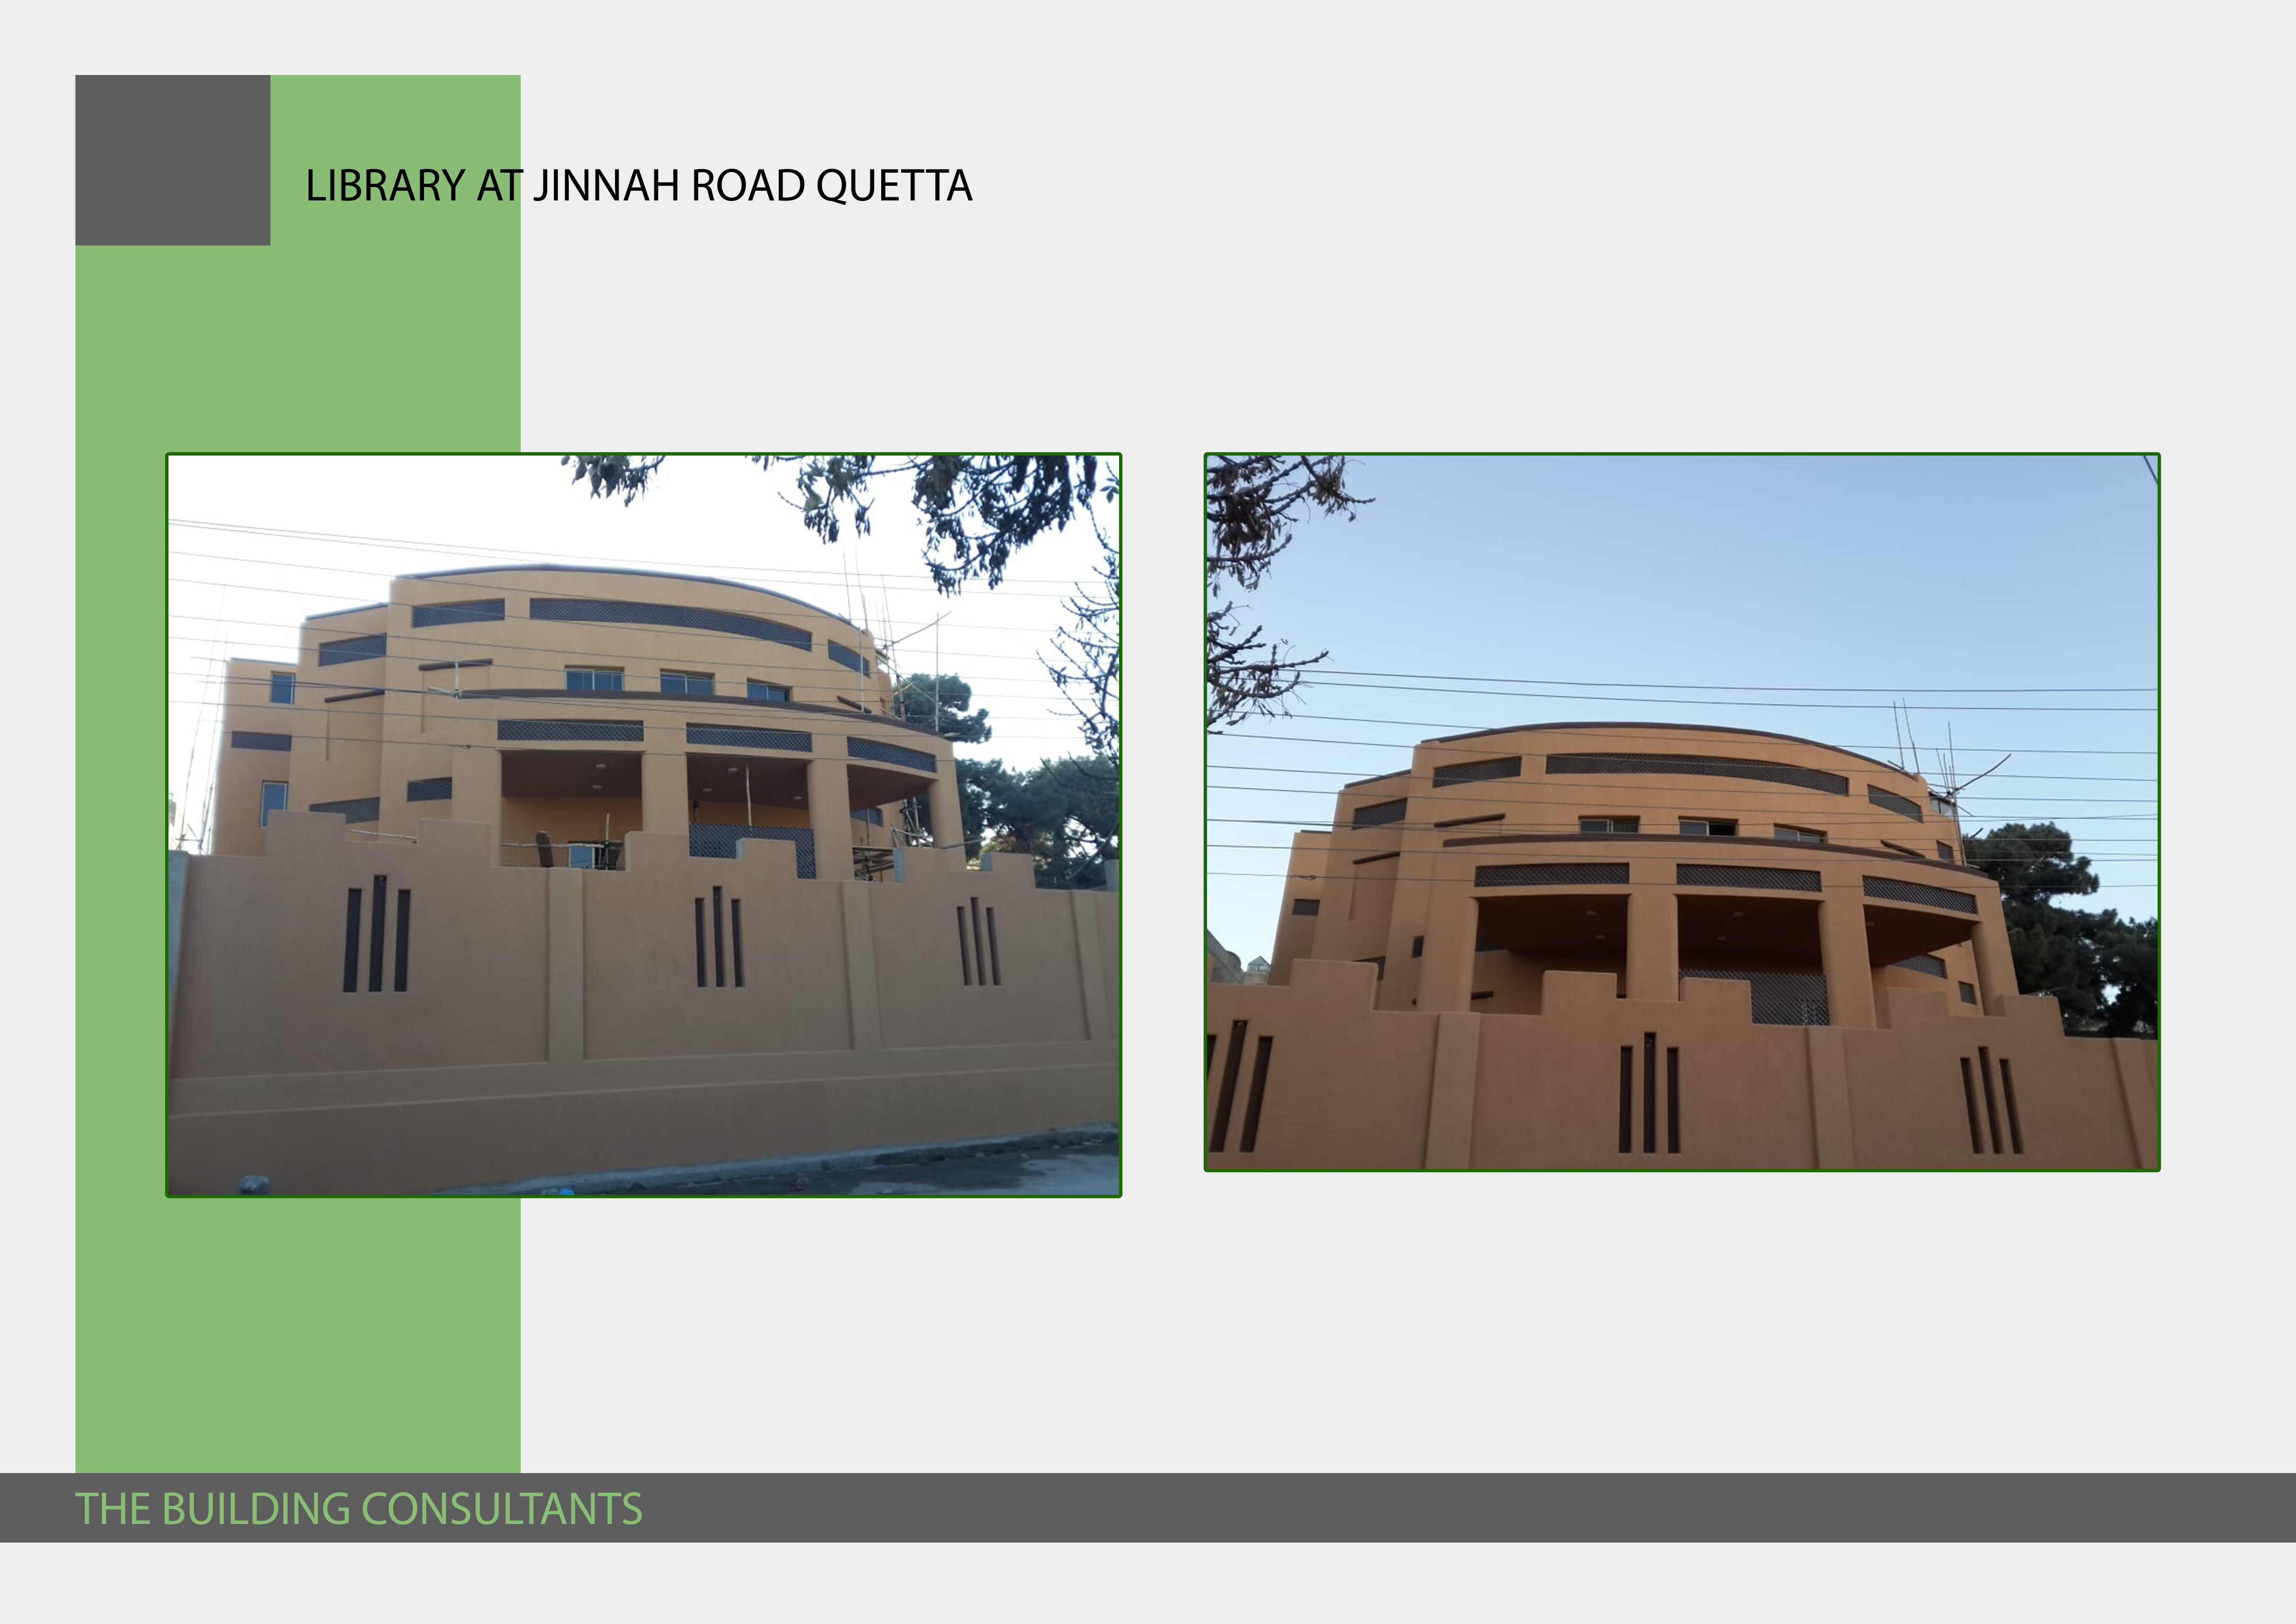 Quaid-e-Azam Library at Jinnah Road.  